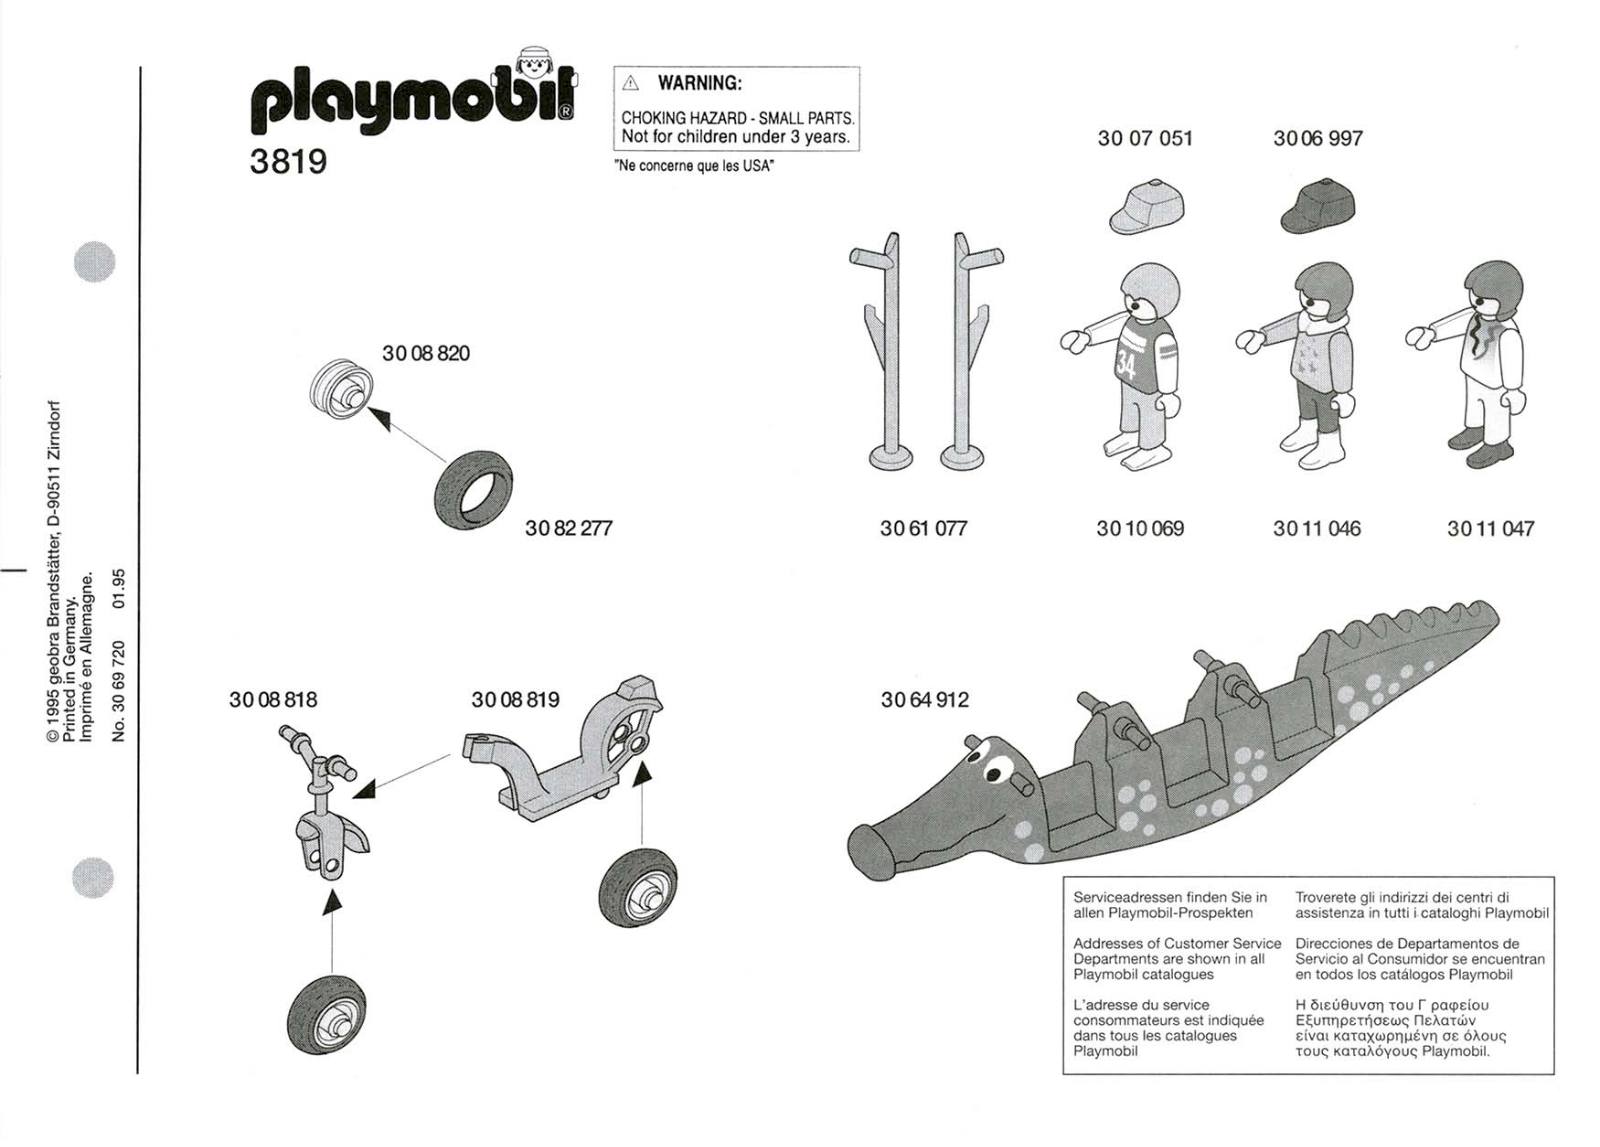 Playmobil 3819 Instructions